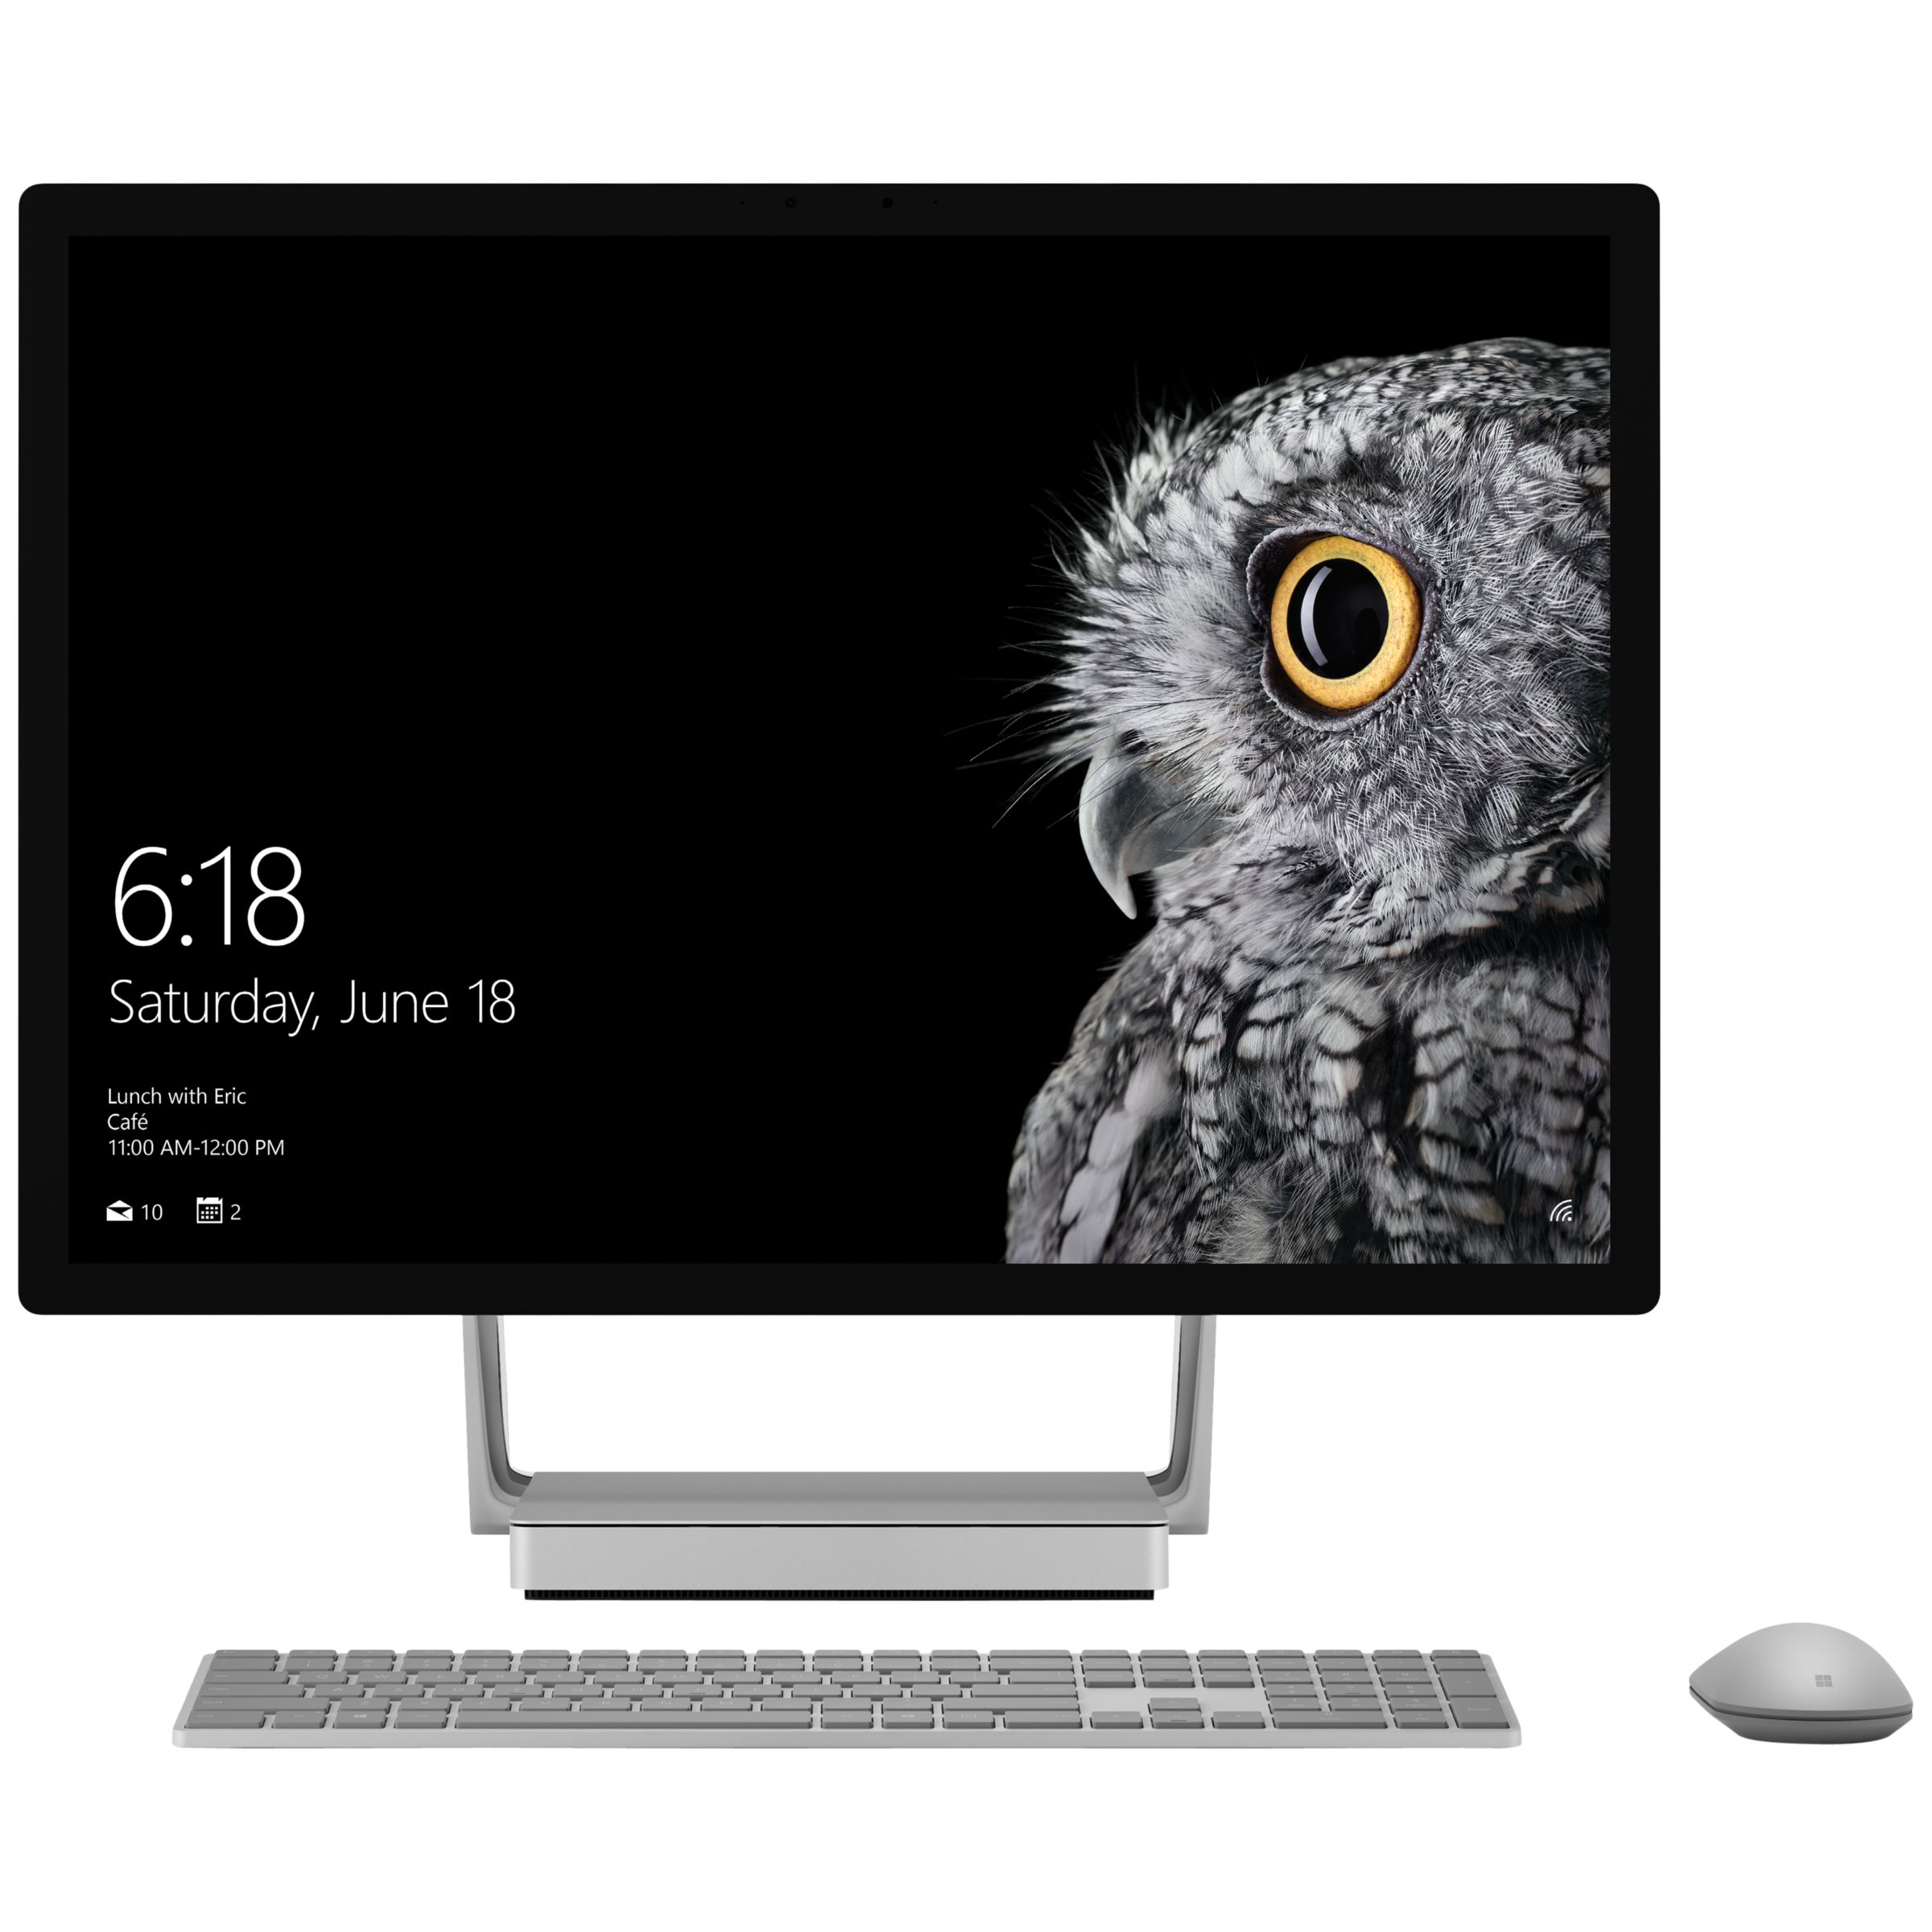 Microsoft Surface Studio, Intel Core i7, 1TB HDD + 128GB SSD, 16GB RAM, 28" PixelSense Display, Silver